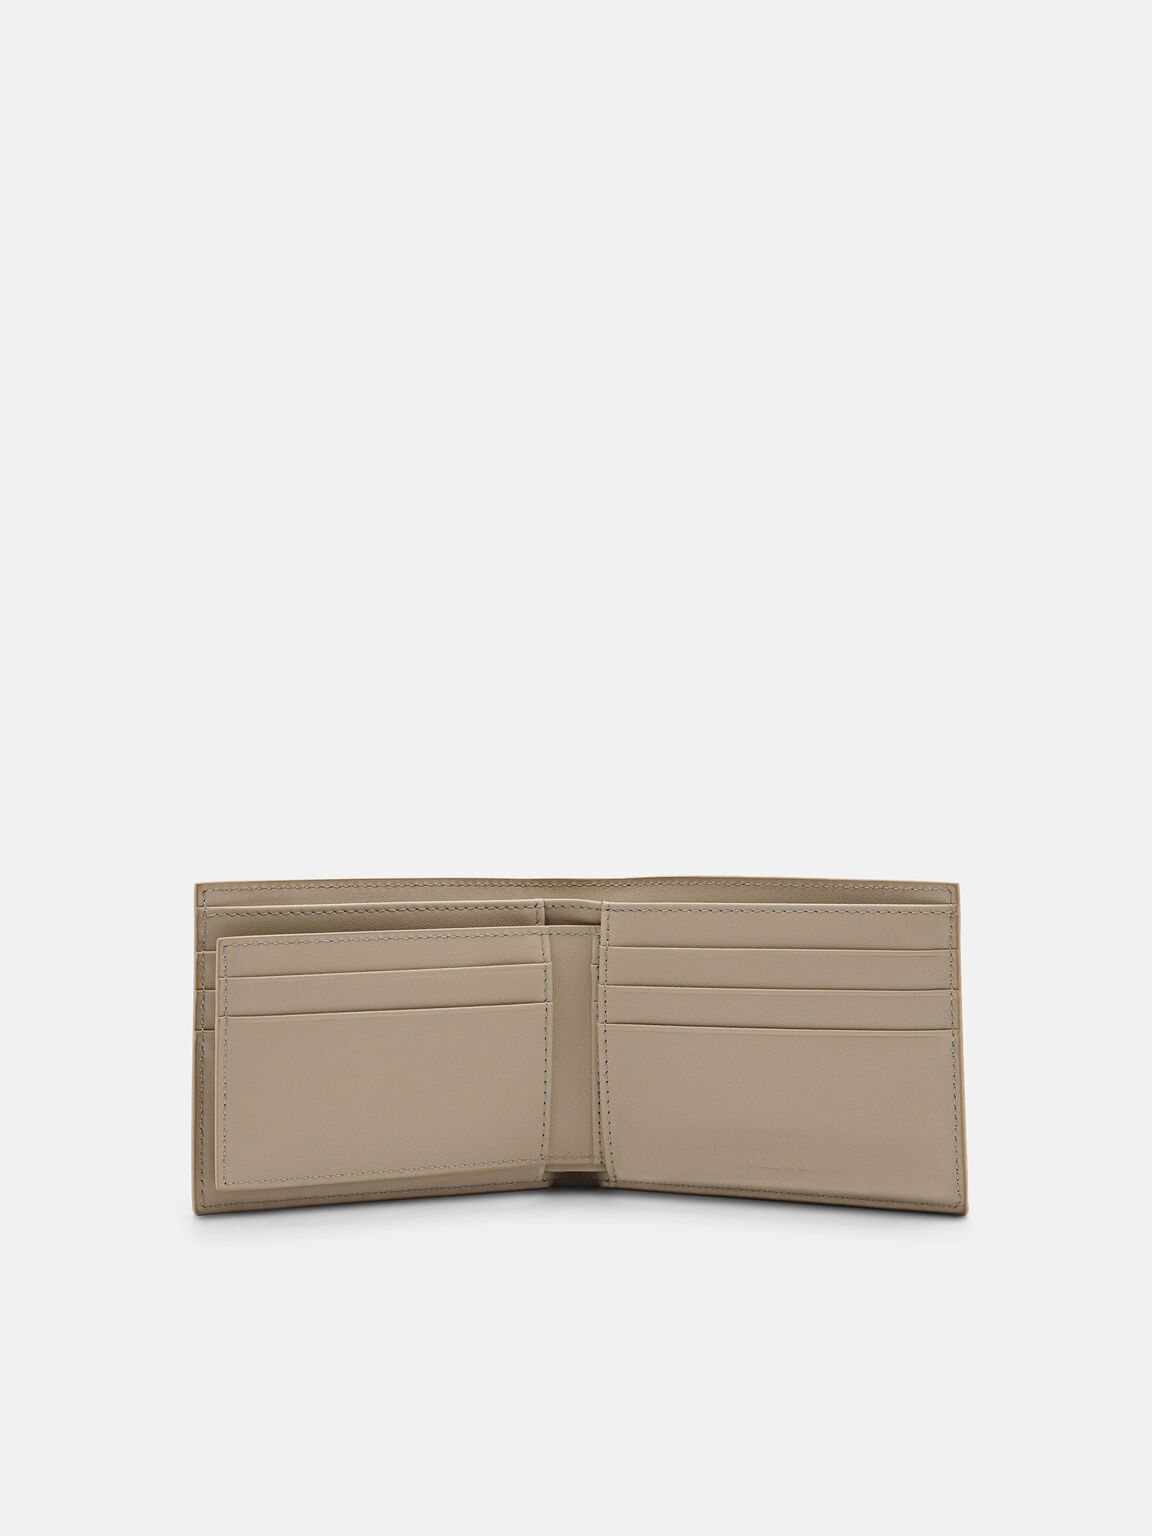 Leather Bi-Fold Insert Wallet, Taupe, hi-res